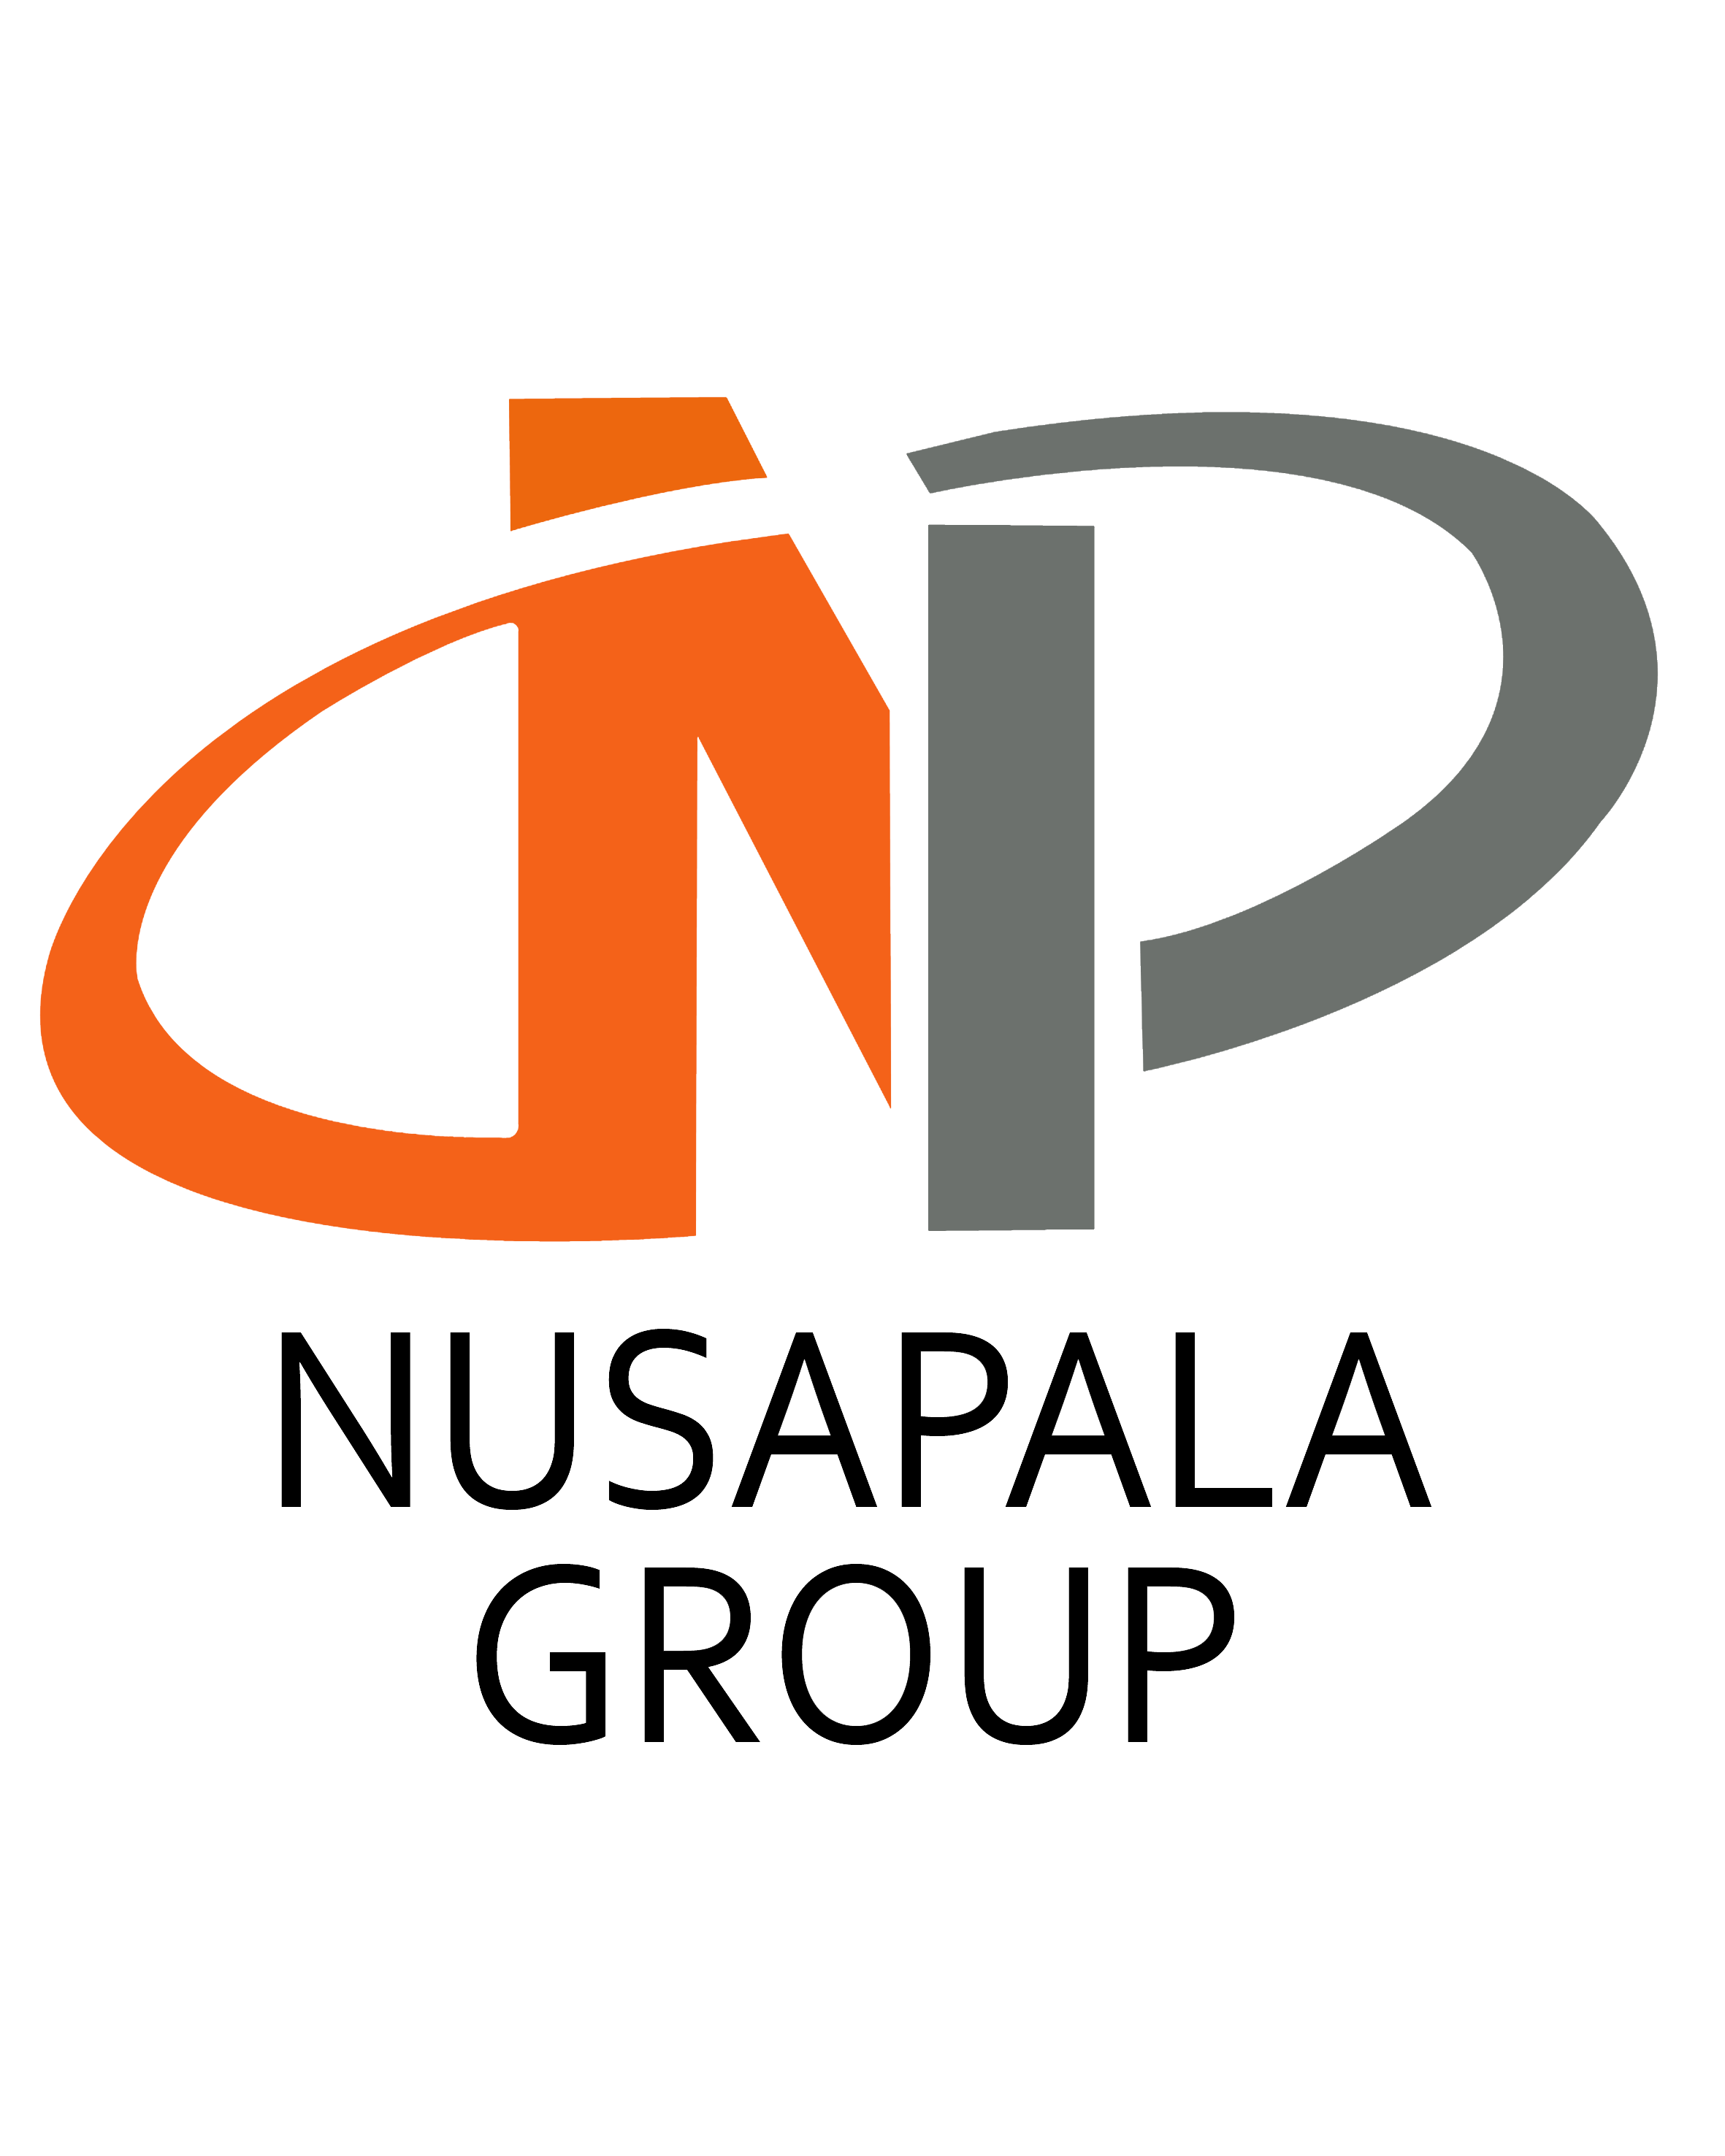 PT. Nusapala Group